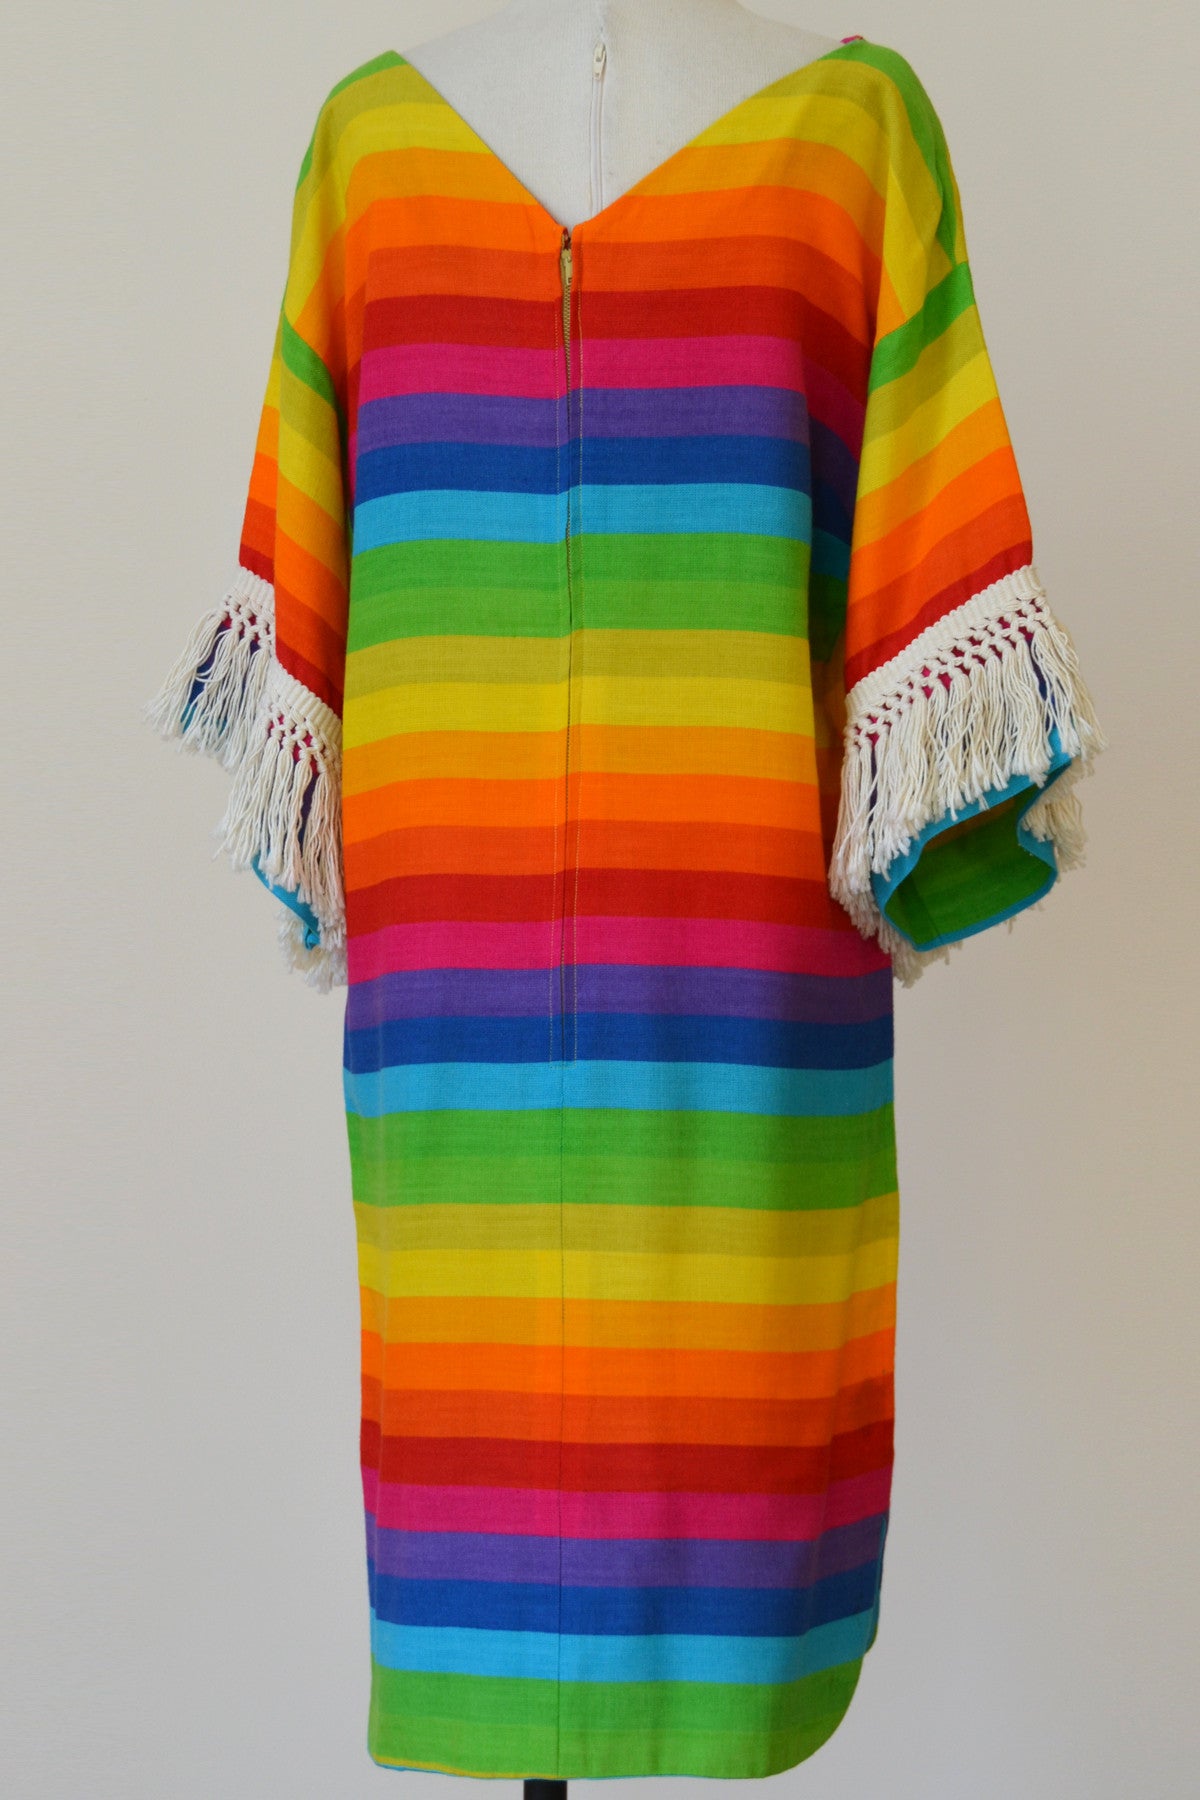 1970s Umbrella Striped Hippie Chic Mini Dress Tunic Cover-Up with Fringe